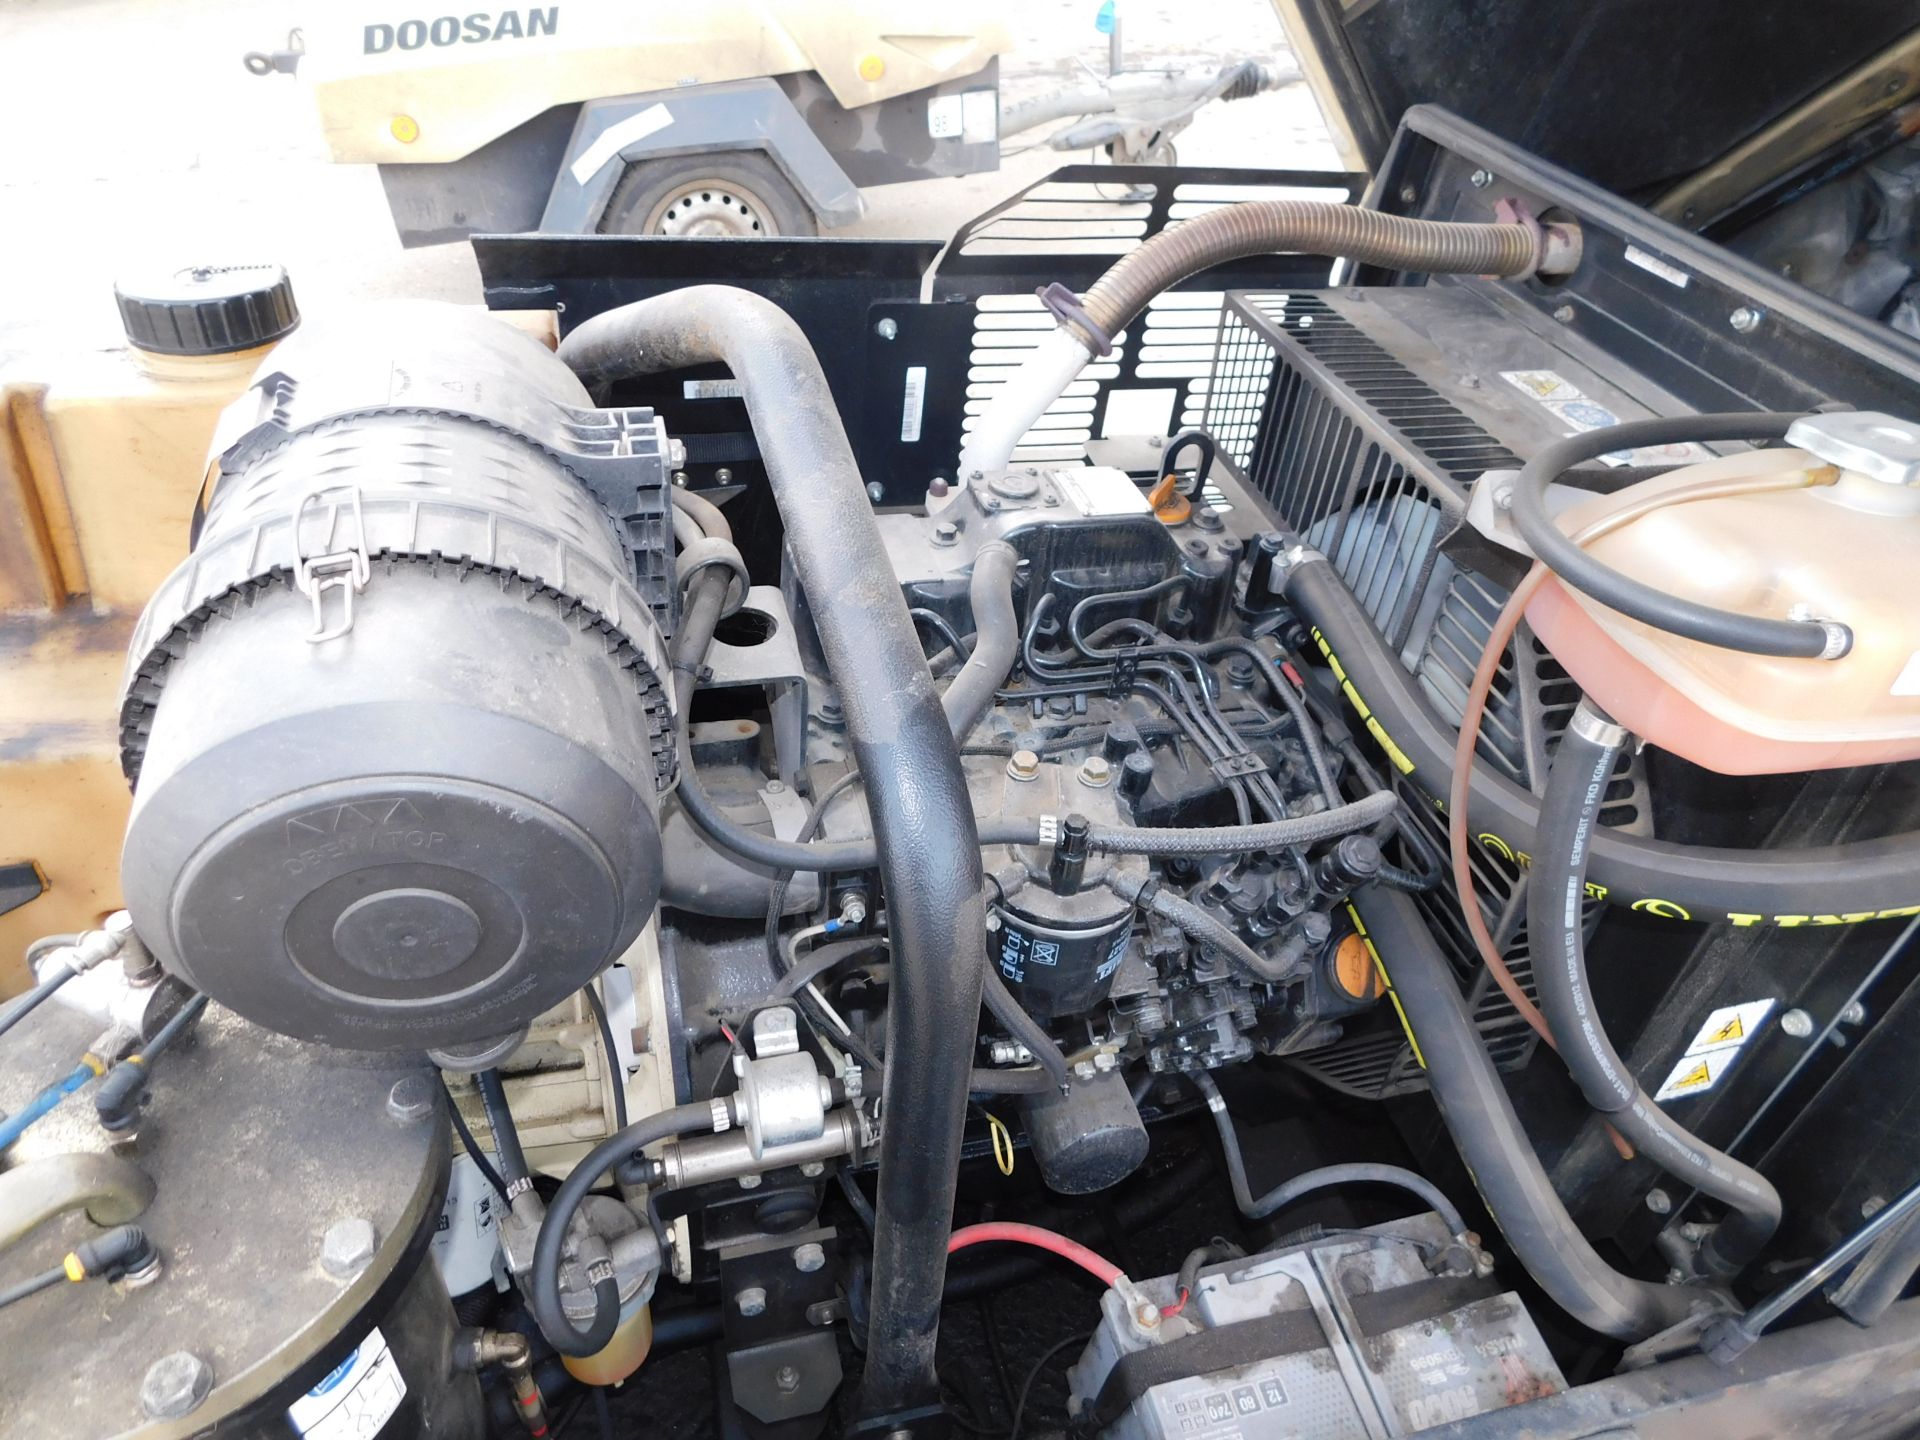 Doosan 731E+ Trailer Mounted Compressor (2013), Serial Number UN5731EFXDY322632, 948 hours ( - Image 9 of 10